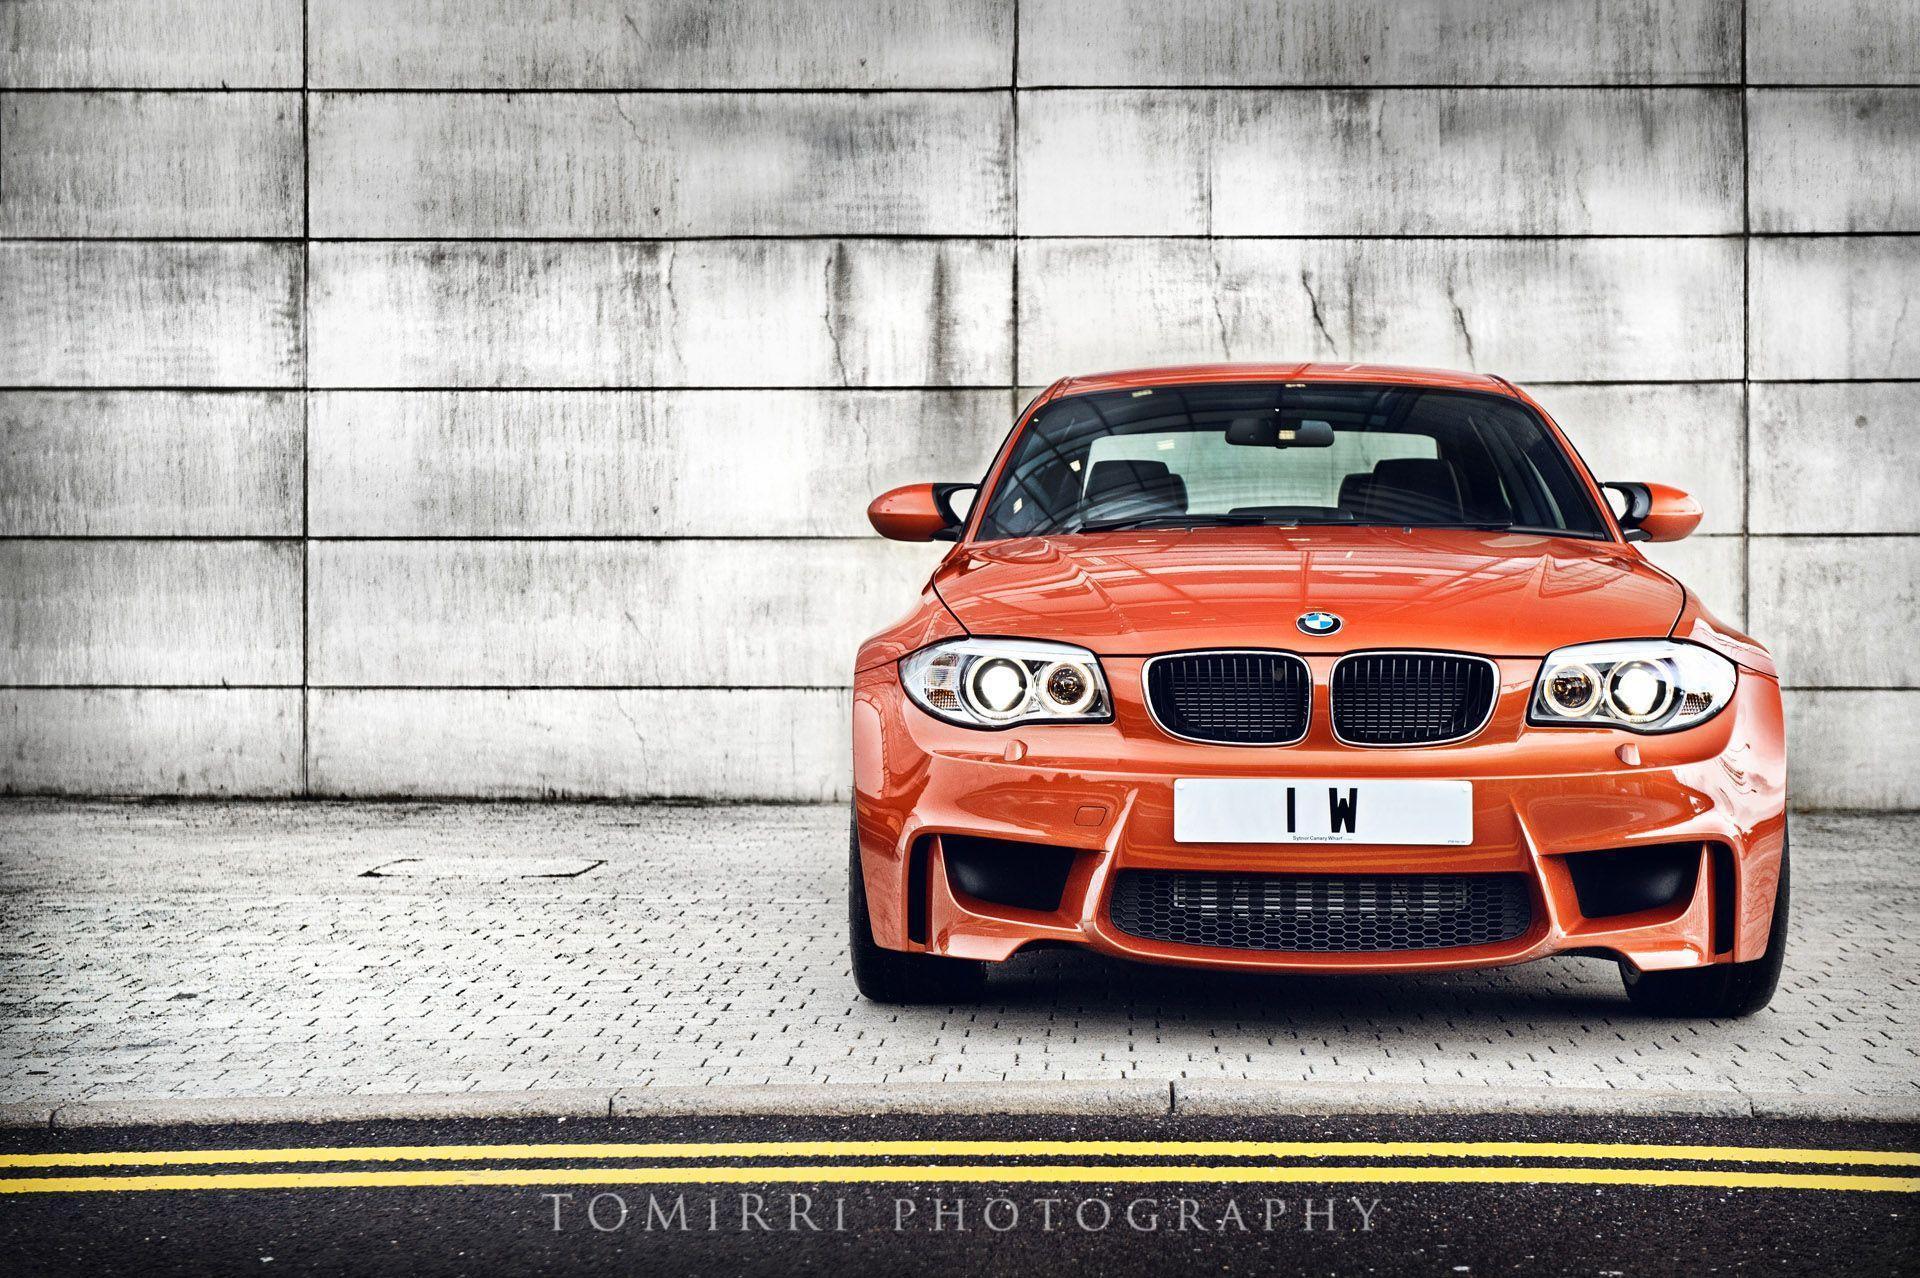 Valencia Orange BMW 1M Photohoot